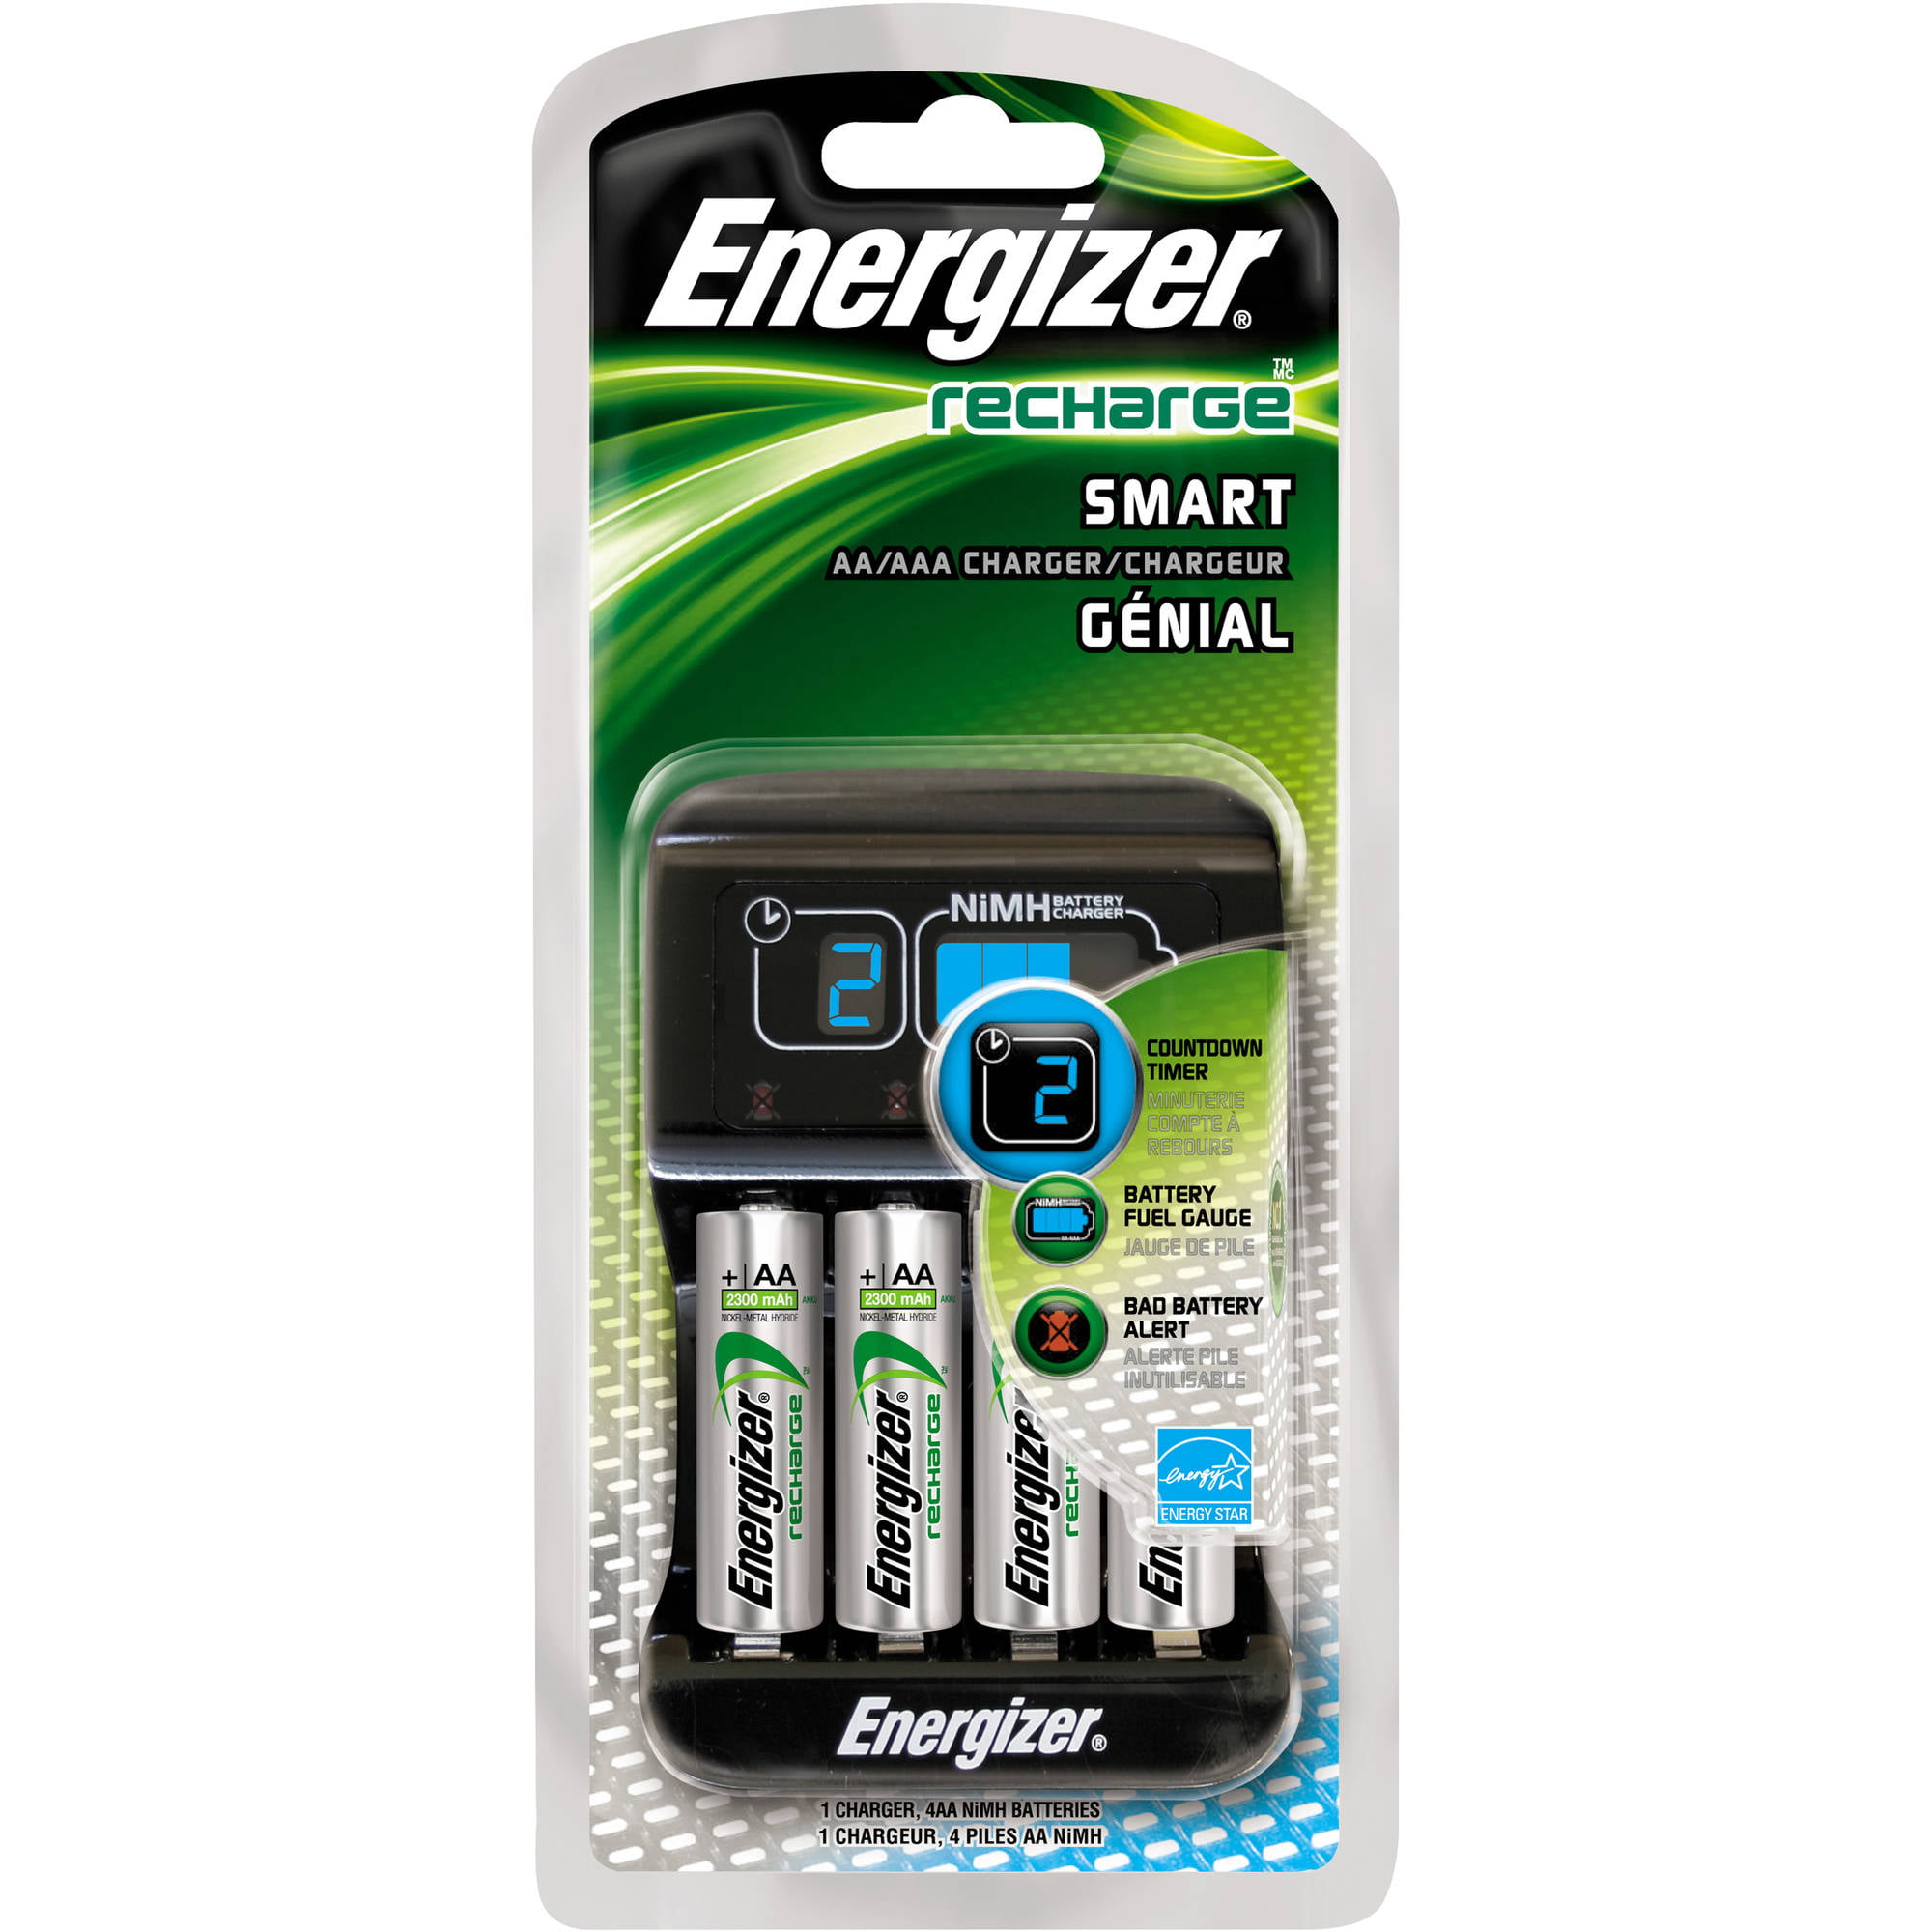 dommer grådig prangende Energizer Smart AA/AAA NiMH Battery Charger - Walmart.com